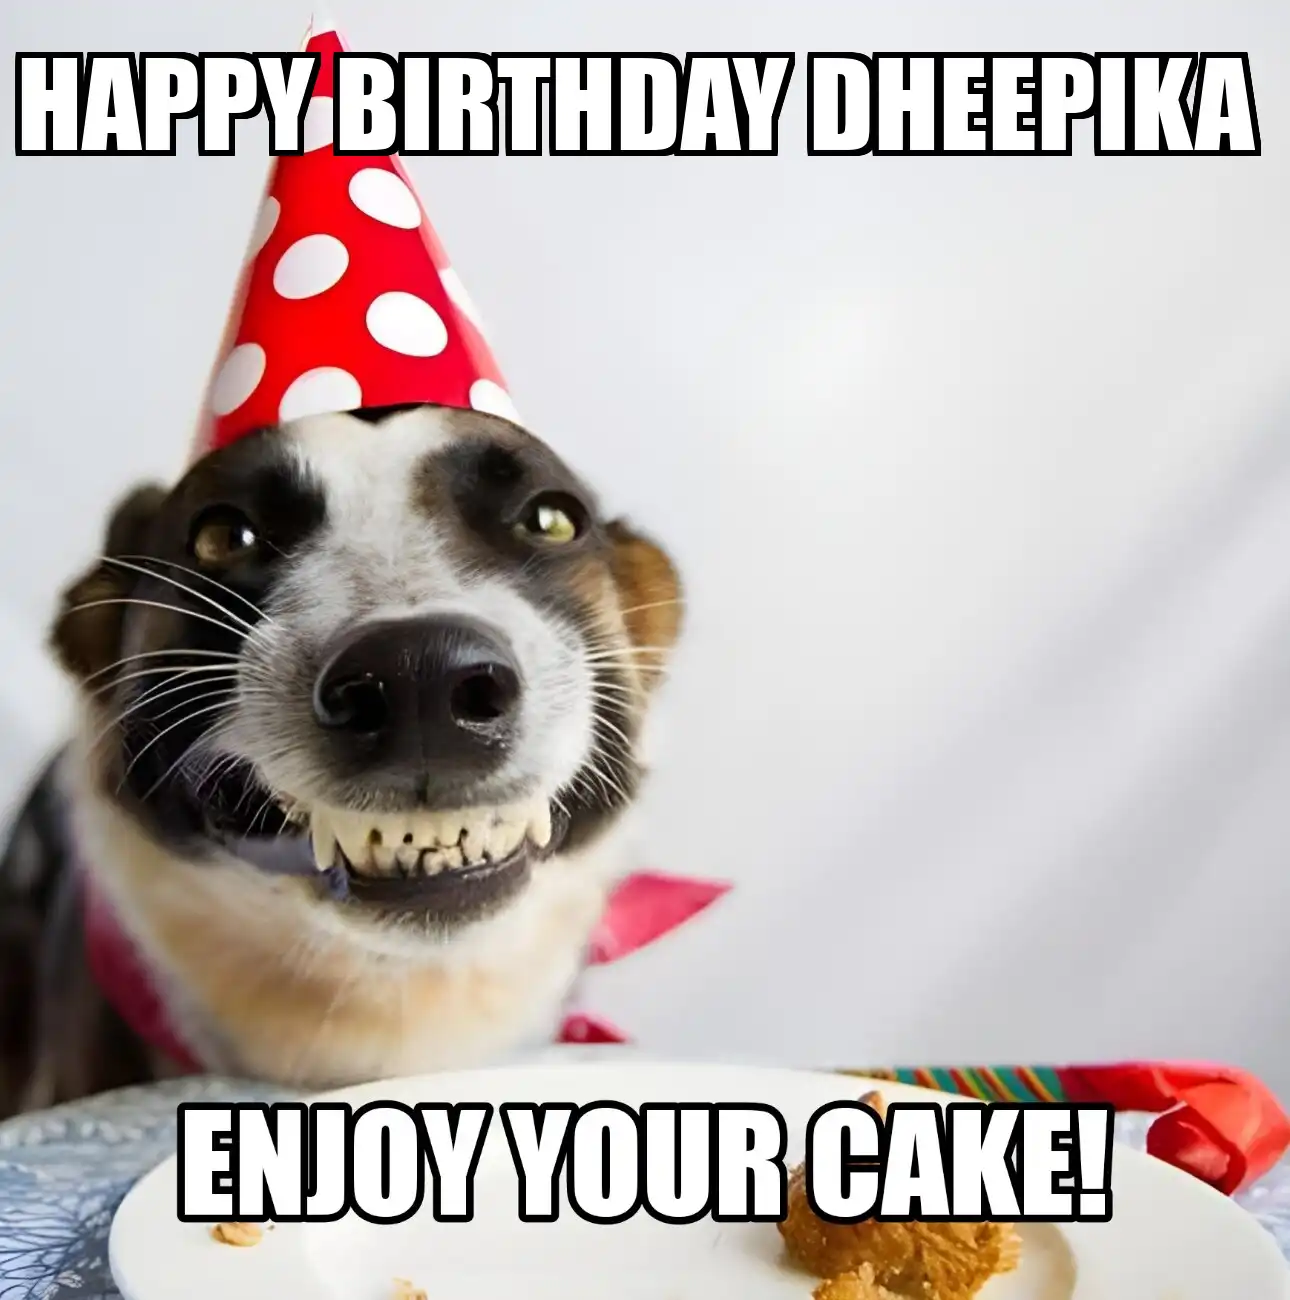 Happy Birthday Dheepika Enjoy Your Cake Dog Meme